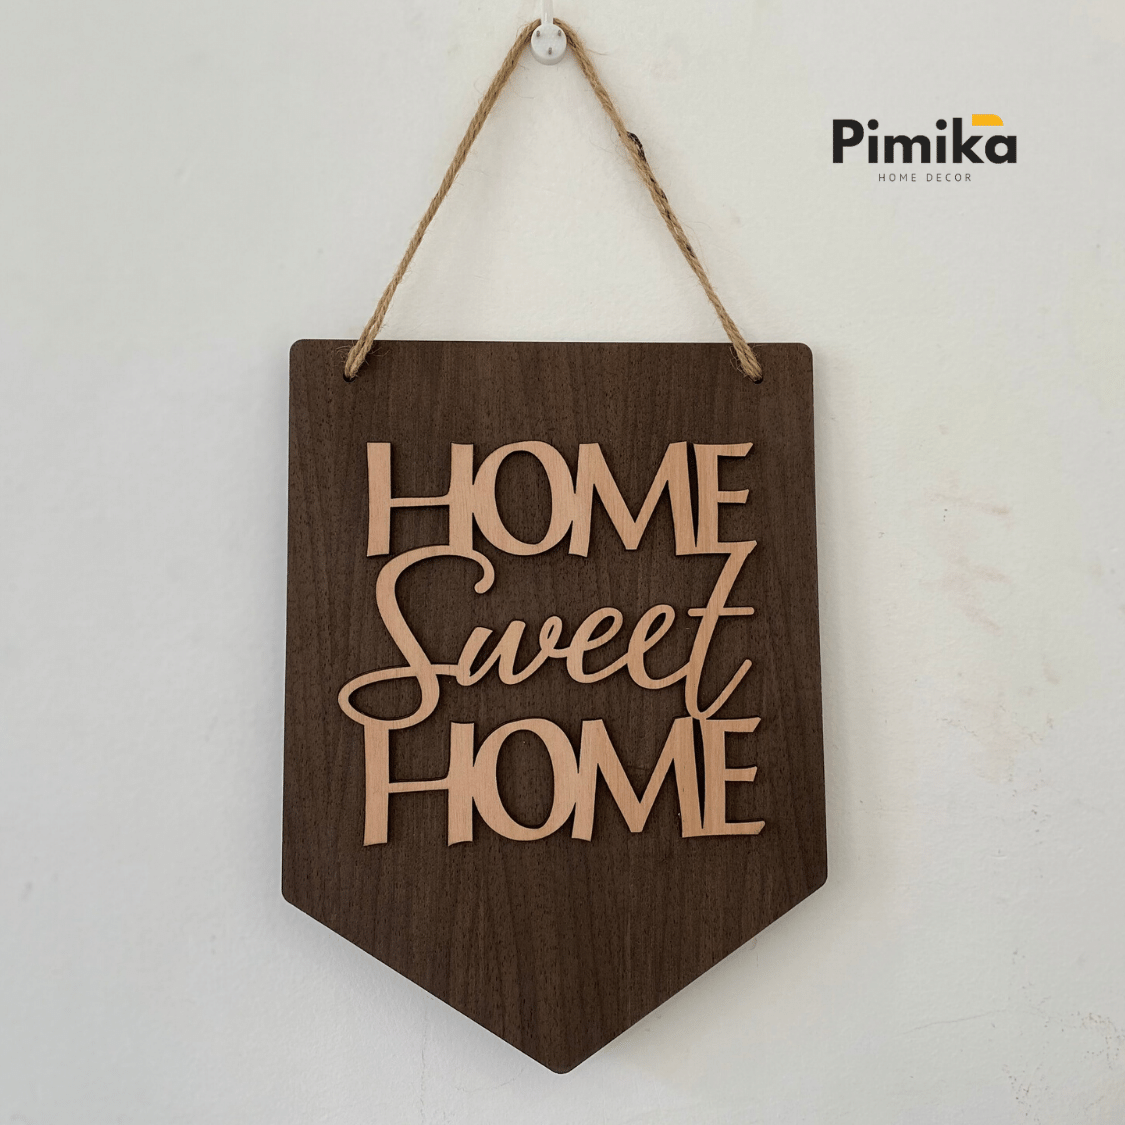 Bảng gỗ treo Home Sweet Home 2 | Pimika Home